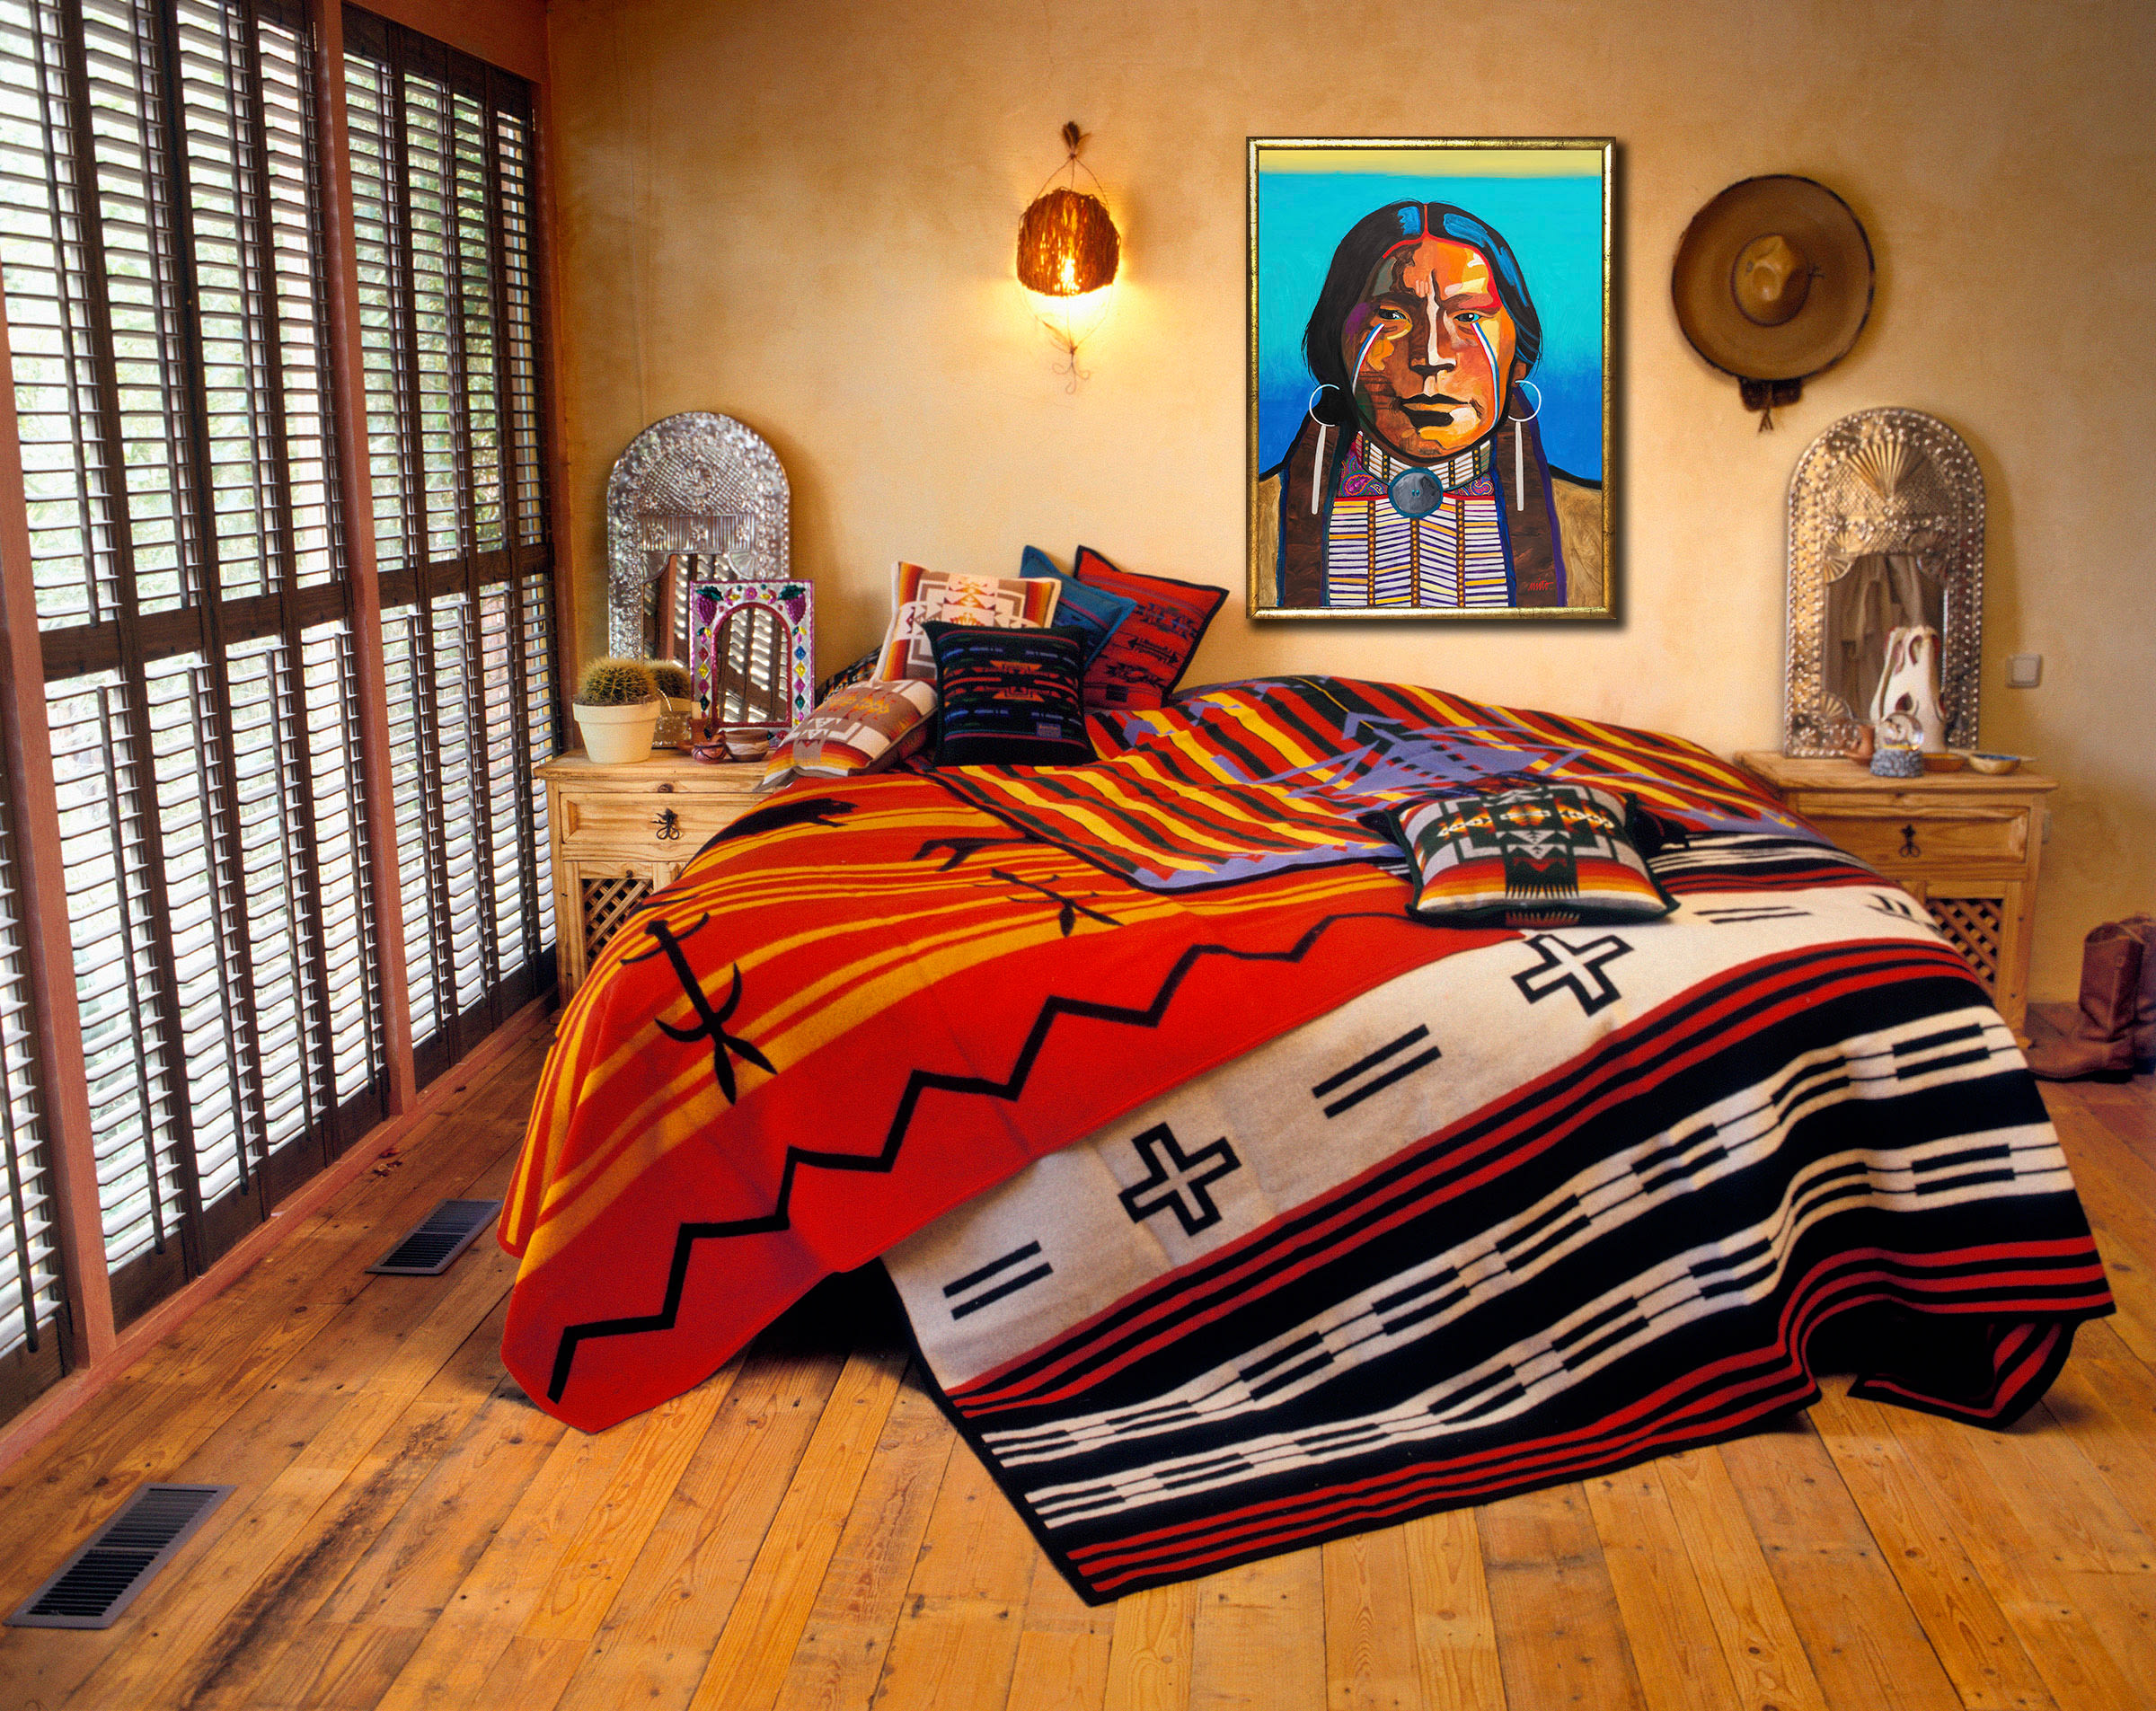 
        <div class='title'>
          Jicarilla Apache, southwest design, santa fe interior, 
        </div>
       
        <div class='description'>
          Southwest Interior design 
        </div>
      